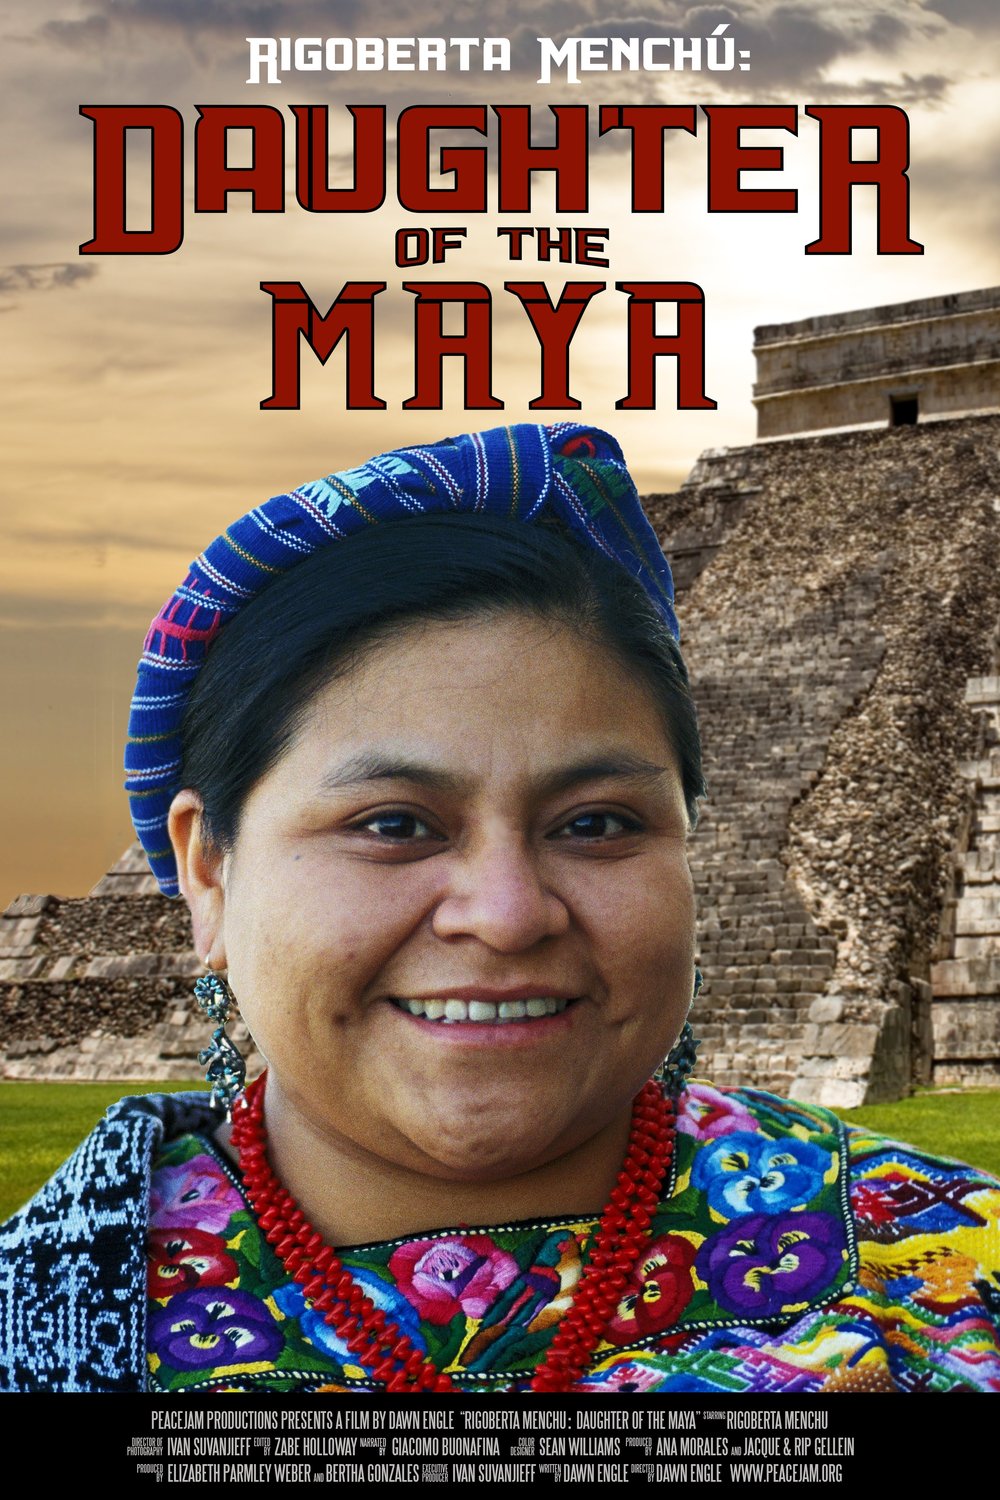 Poster of the movie Rigoberta Menchu: Daughter of the Maya